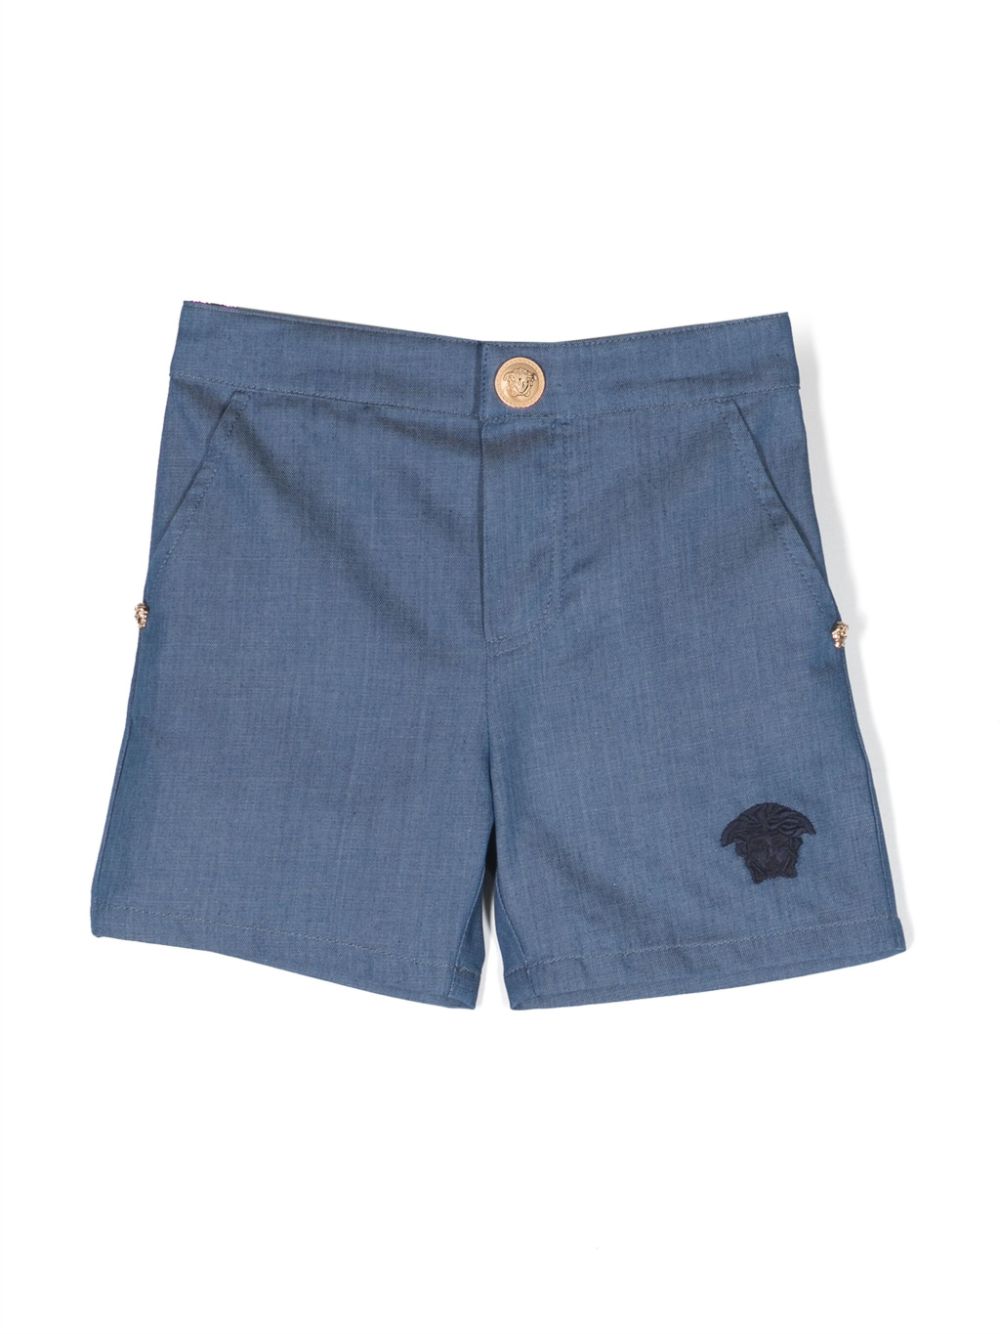 Blue Bermuda shorts for newborns with logo